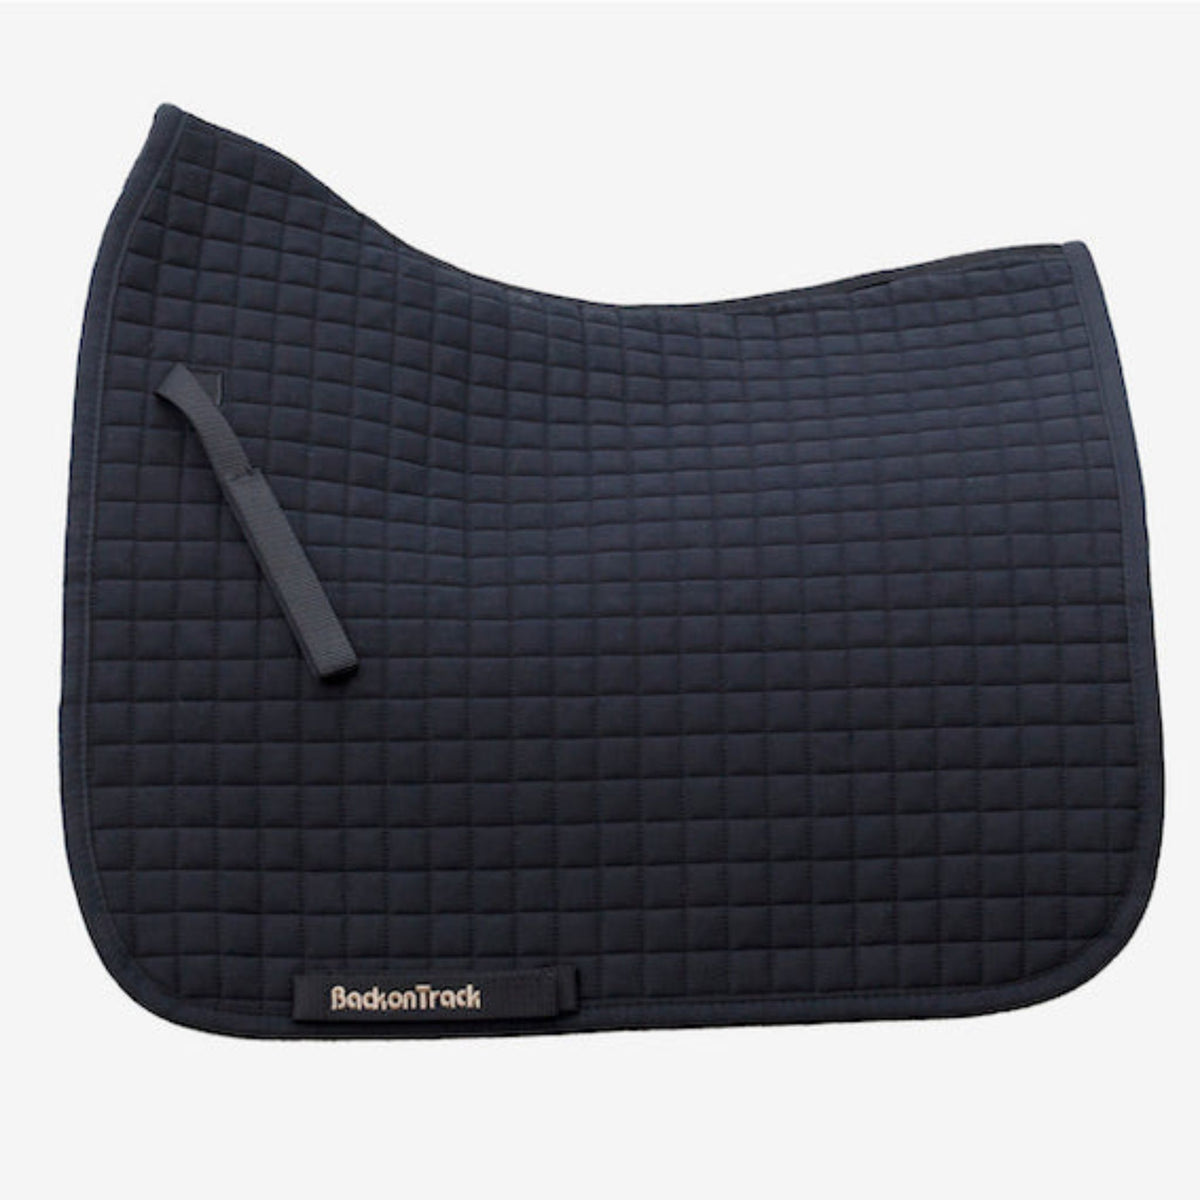 Black dressage saddle pad with velcro tabs.